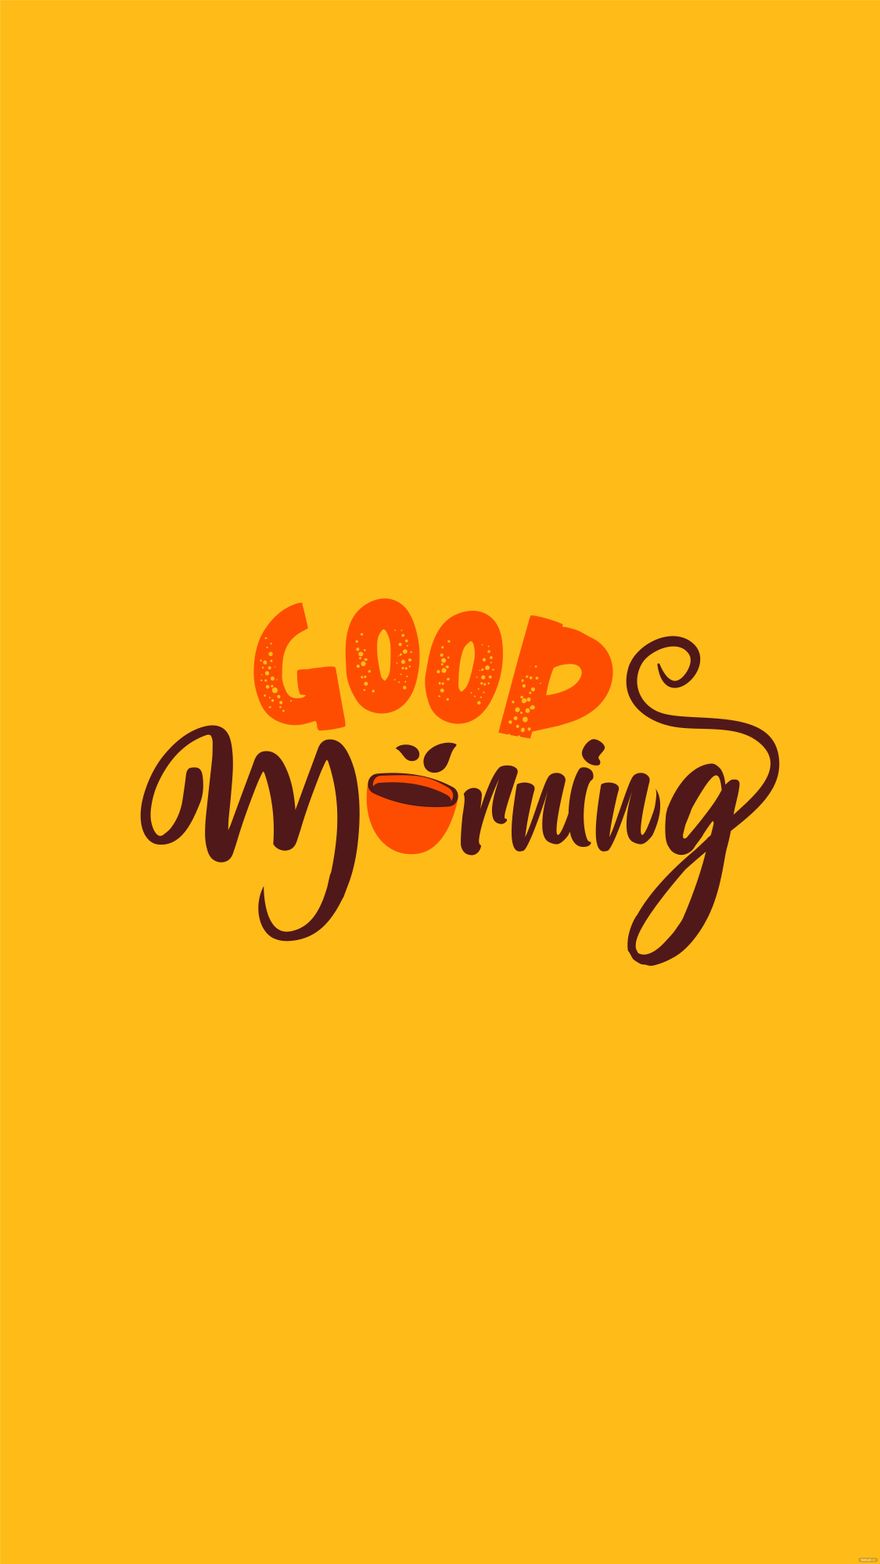 Free Good Morning Mobile Wallpapers - EPS, Illustrator, JPG, PNG, SVG |  